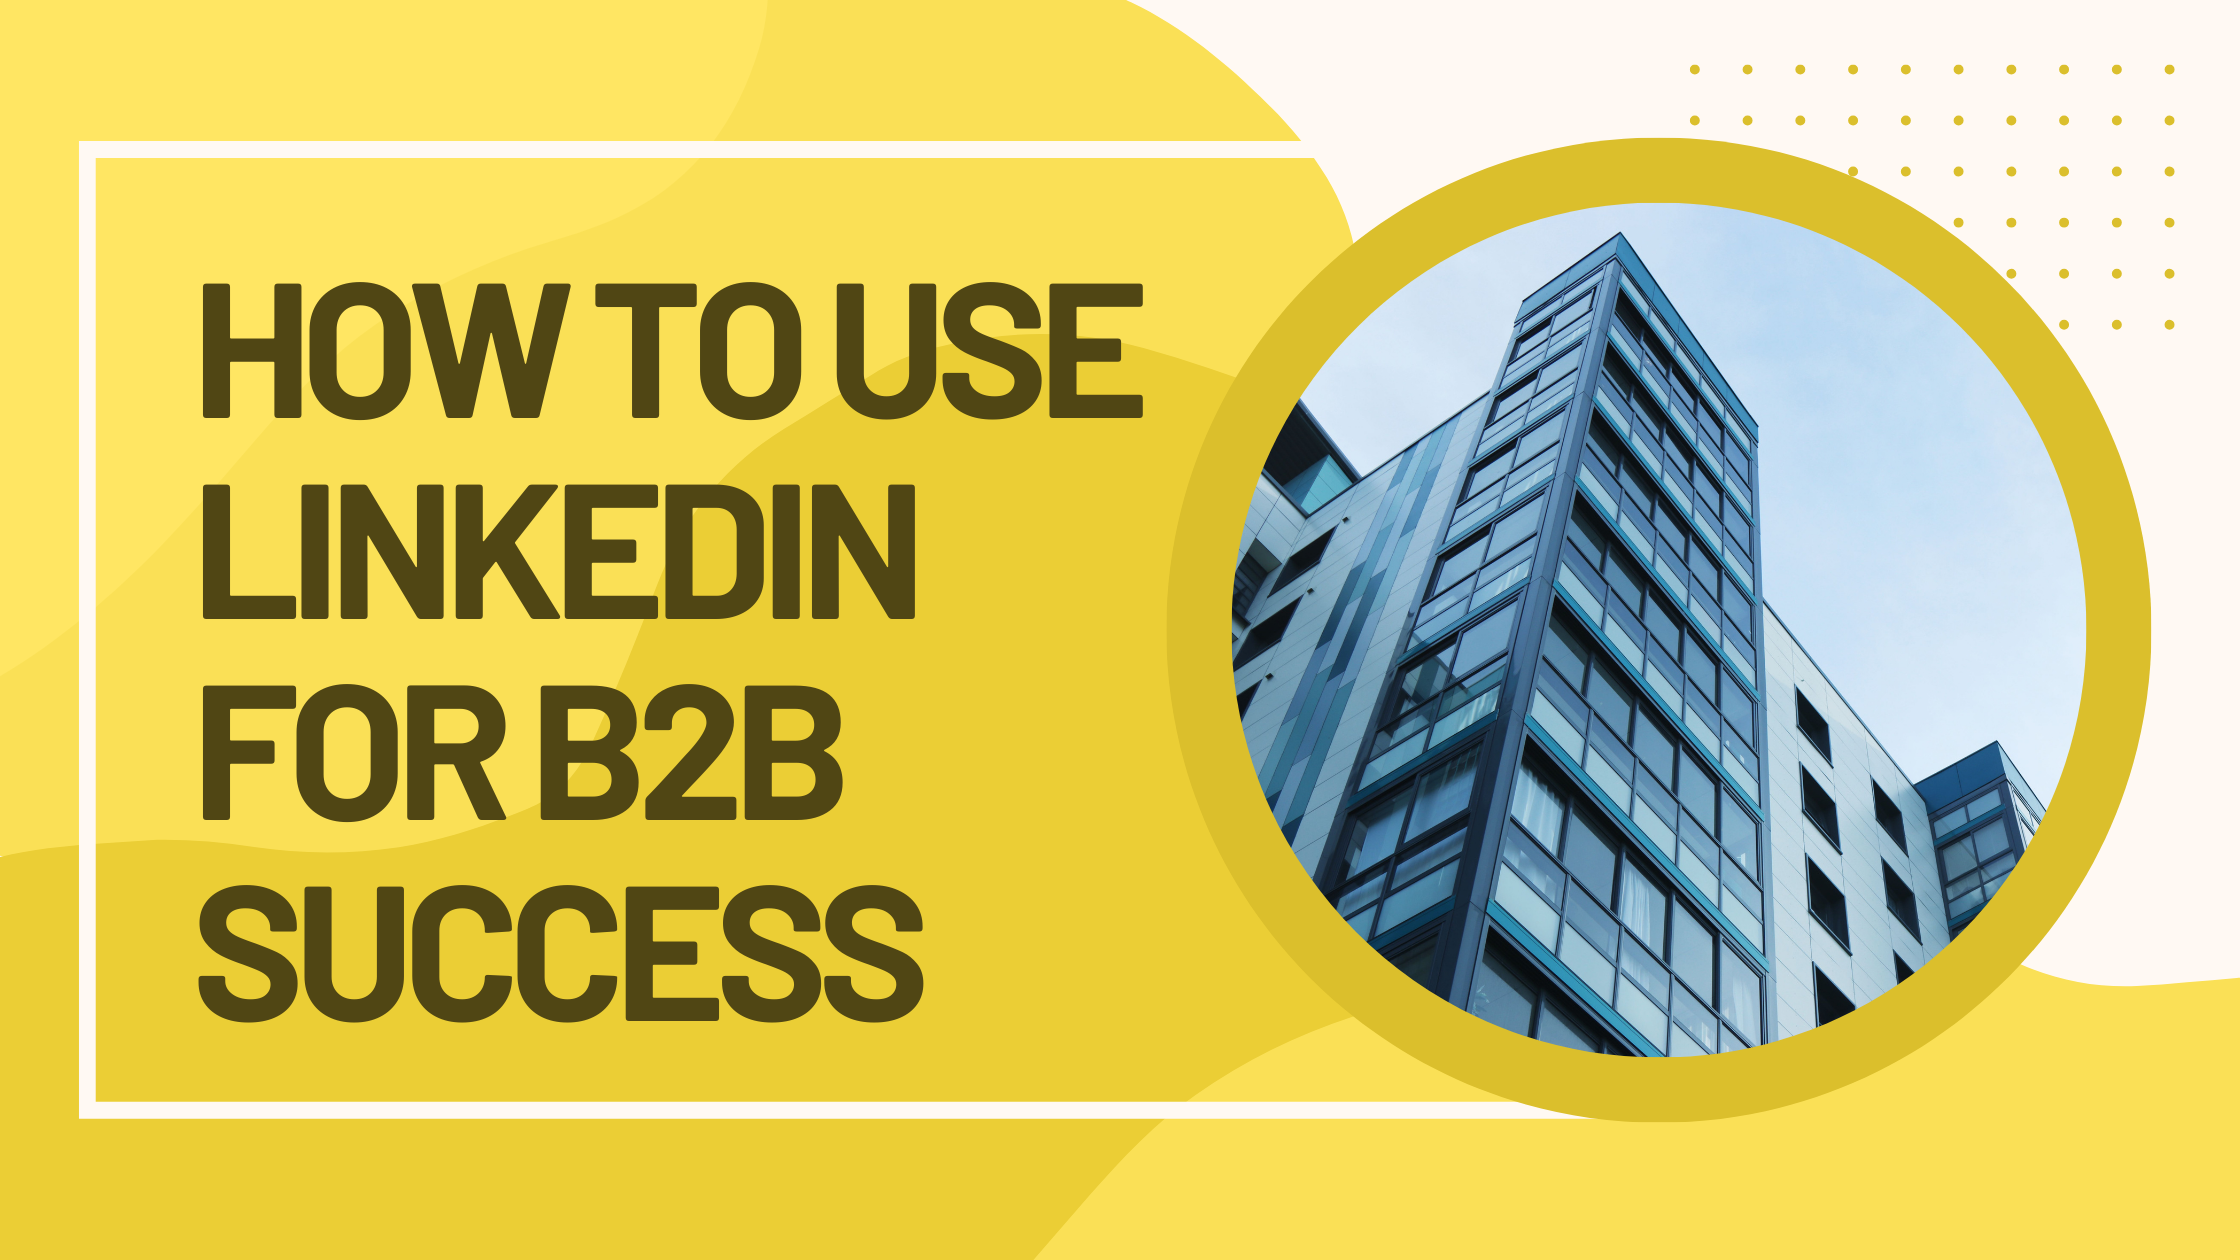 LinkedIn for B2B Success